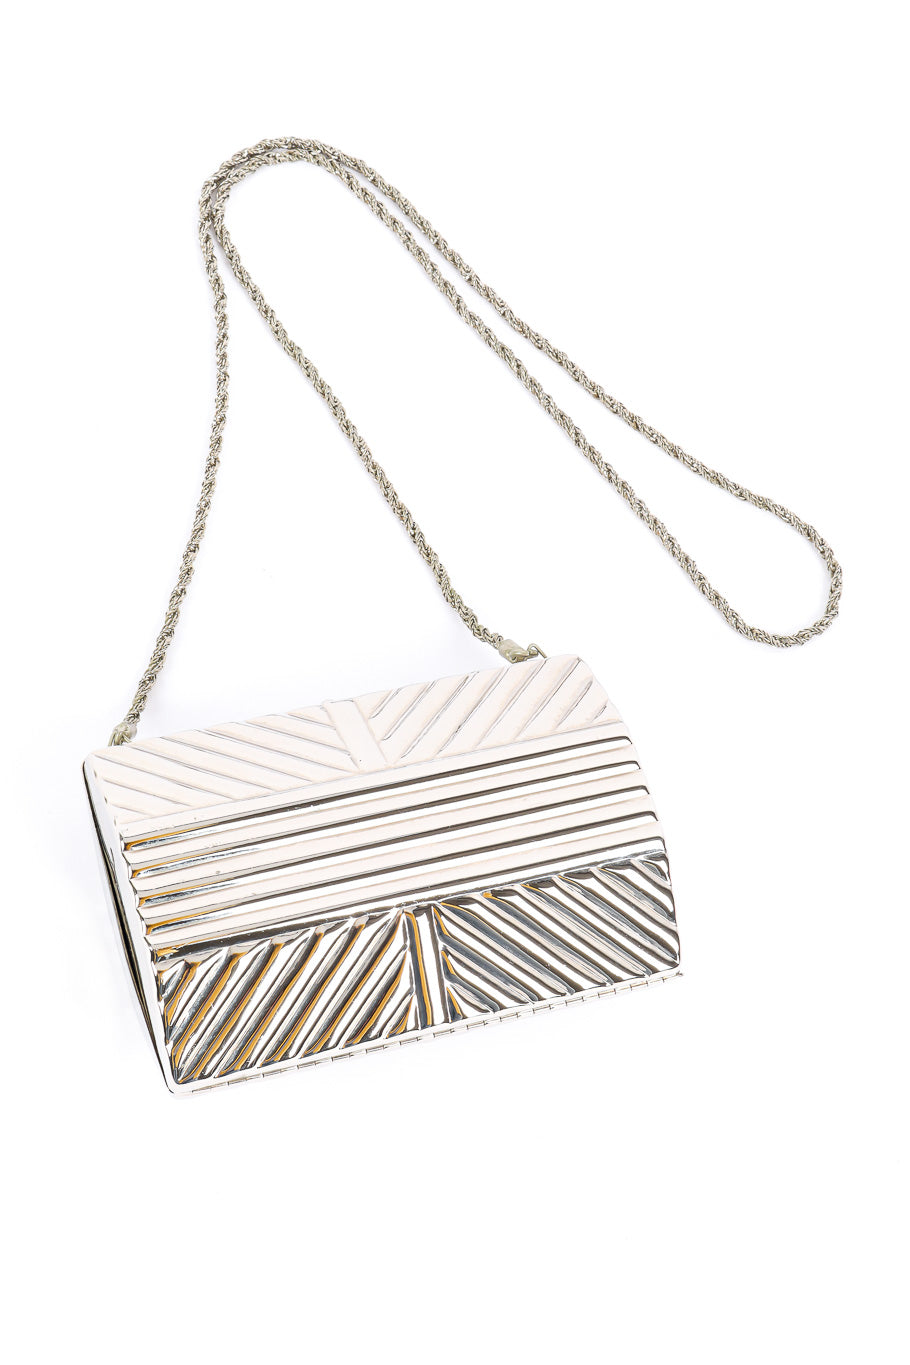 Saks Fifth Avenue metal silver clutch product shot @recessla